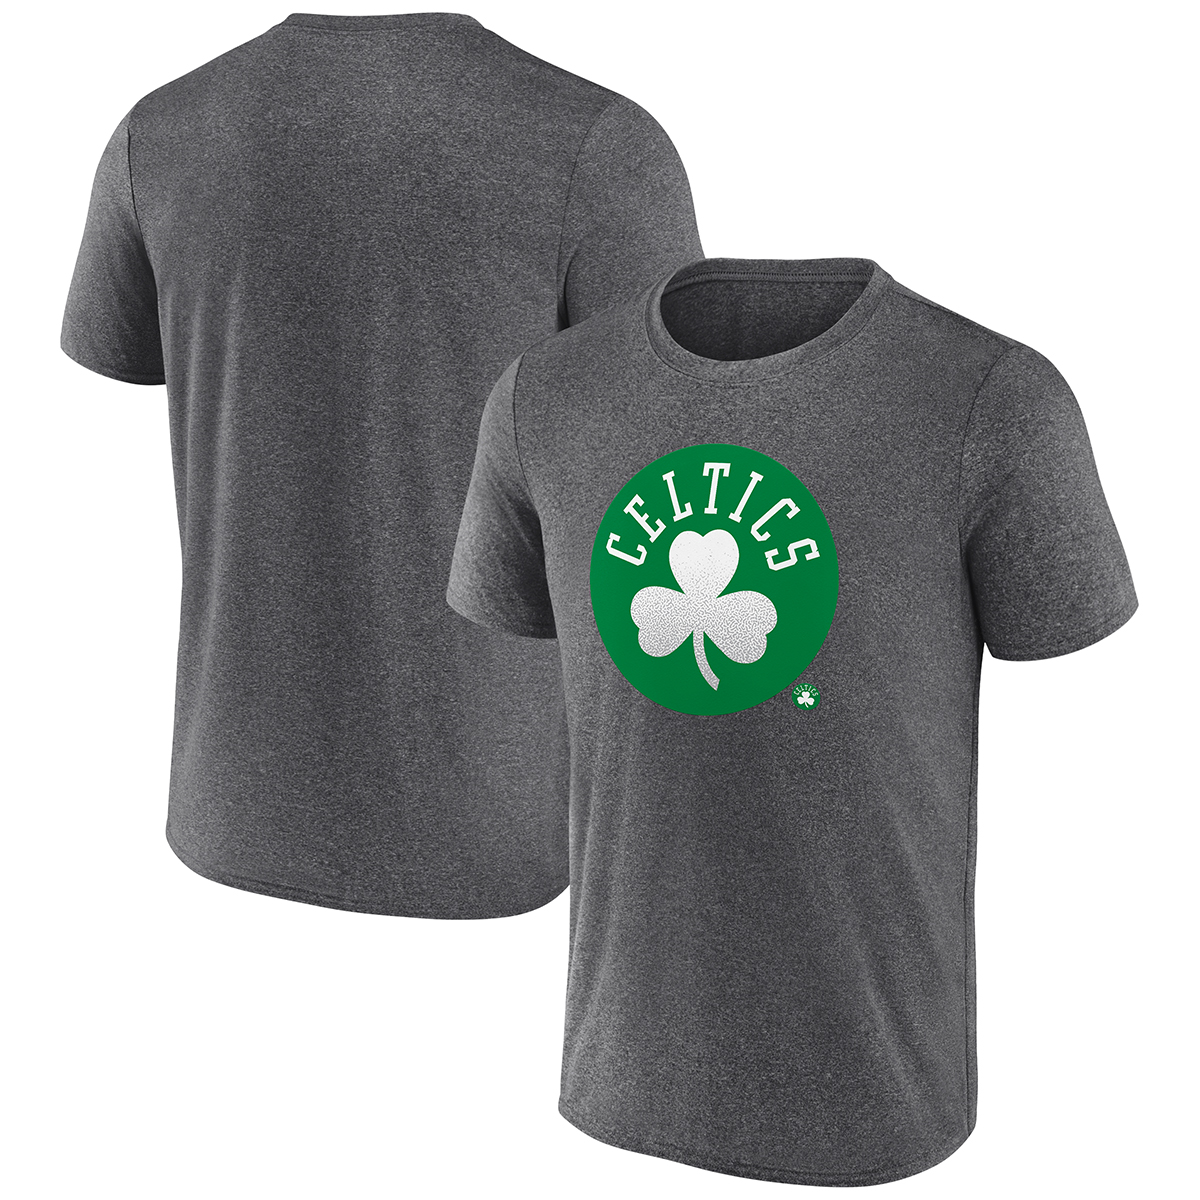 Boston Celtics Men's Fanatics Locked In Short-Sleeve Tee